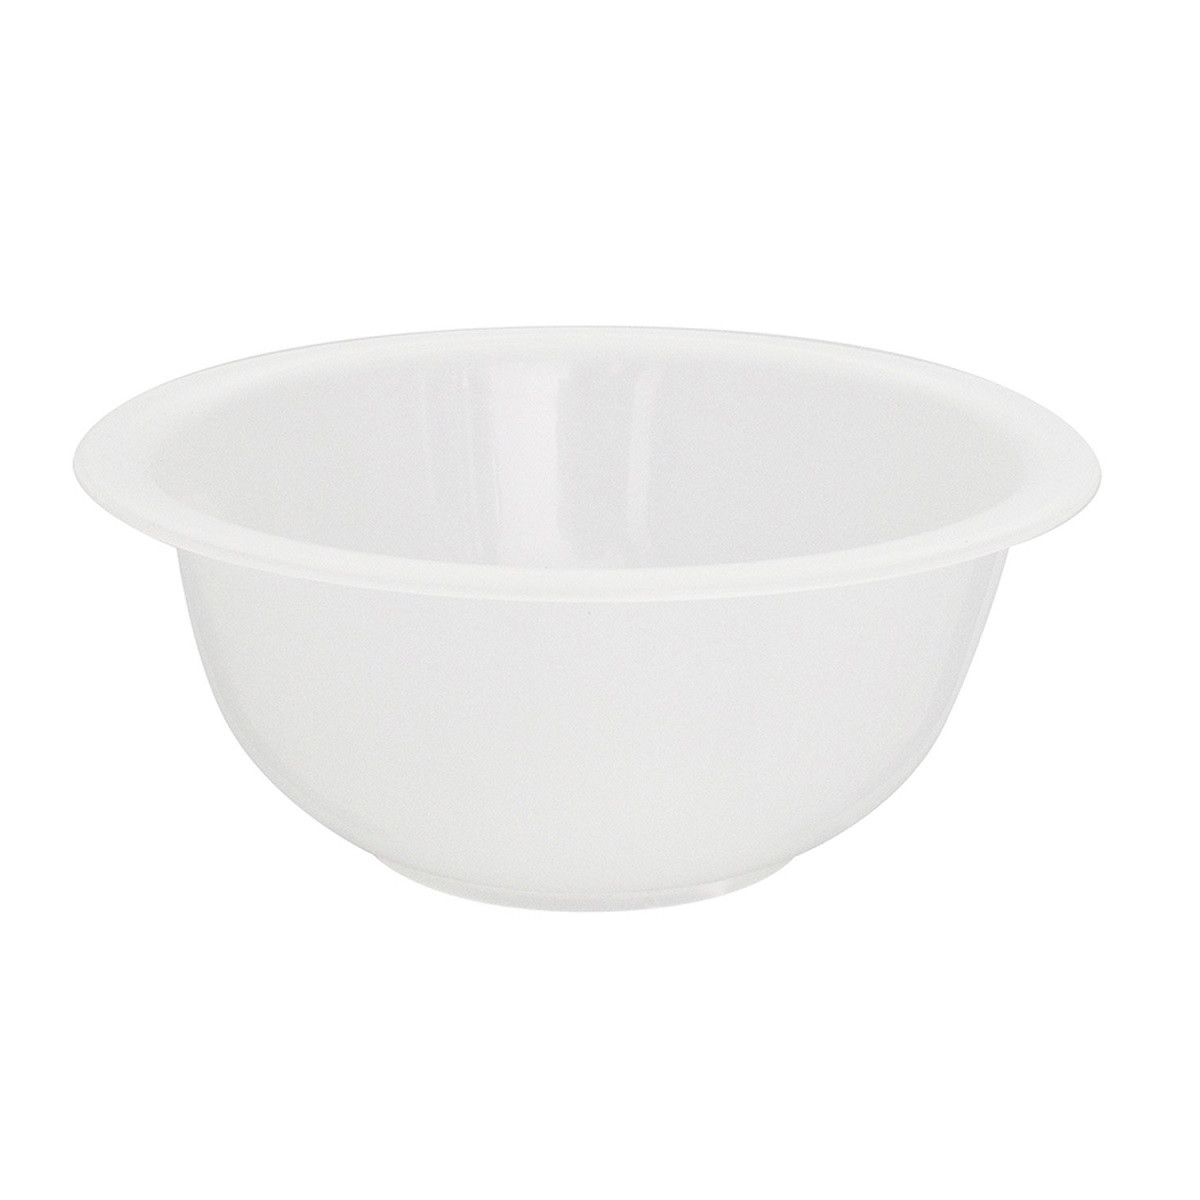 Frying bowl plastic, 36 cm.